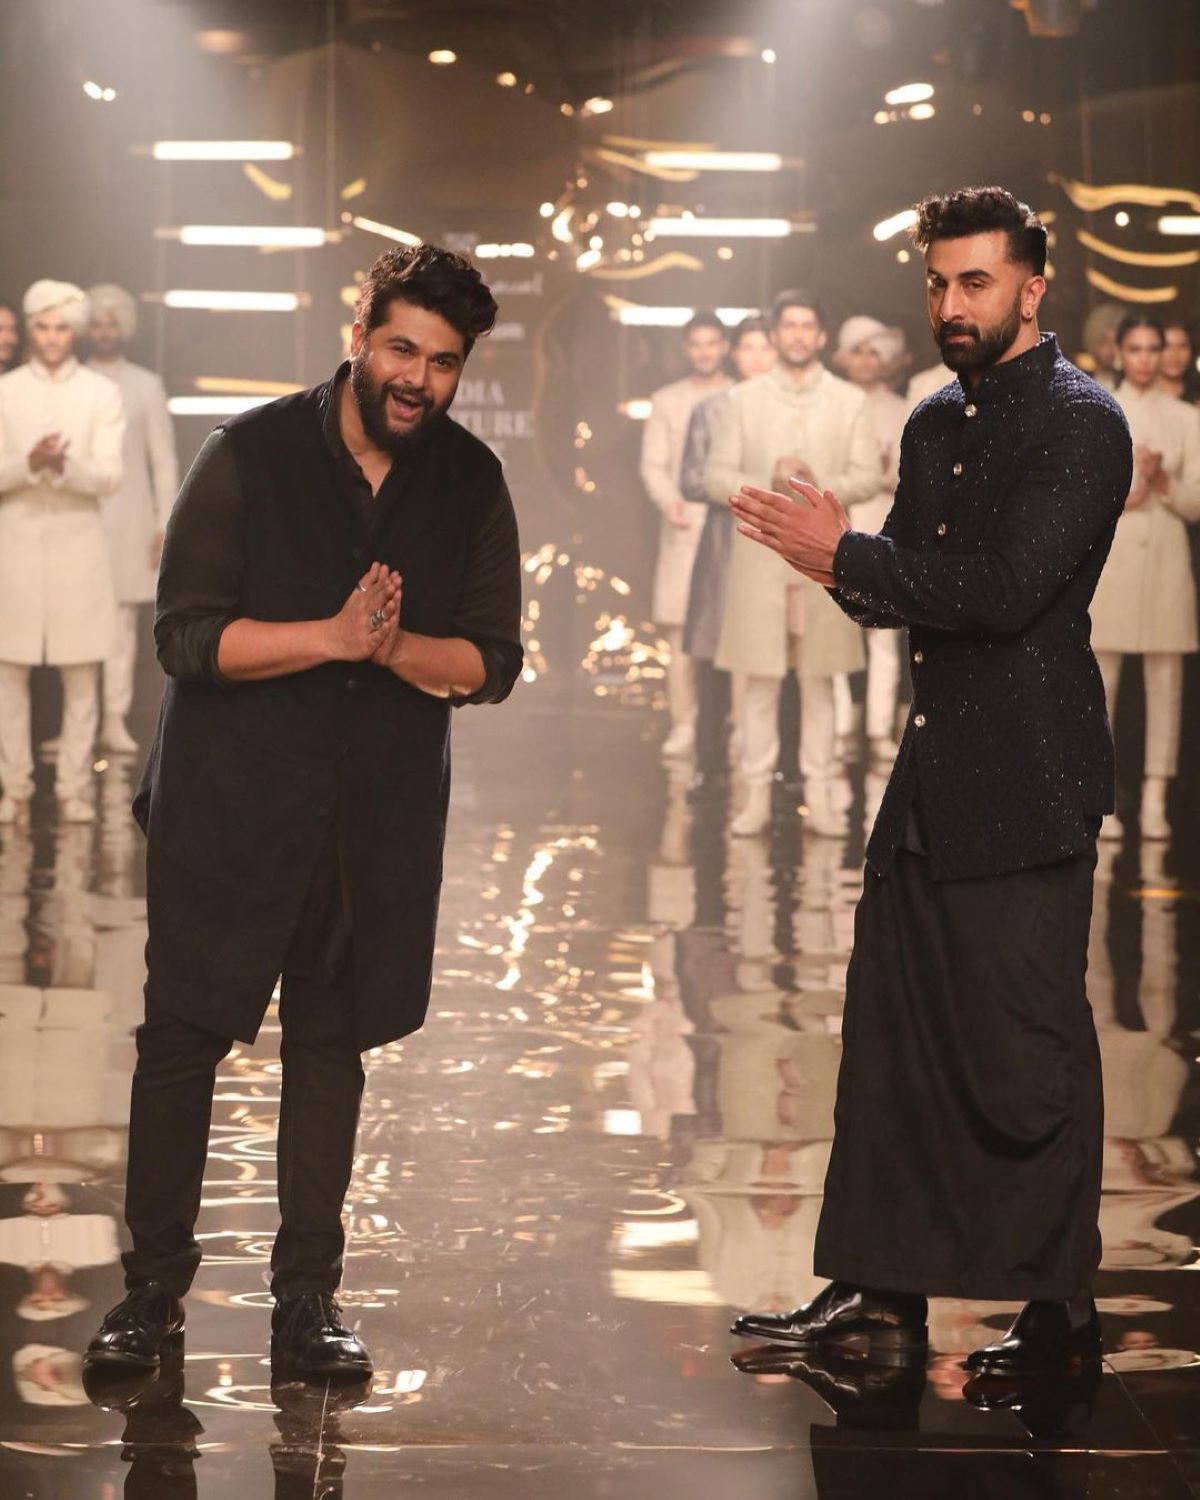 How to Style Like Ranbir Kapoor? How to Dress Like Ranbir Kapoor